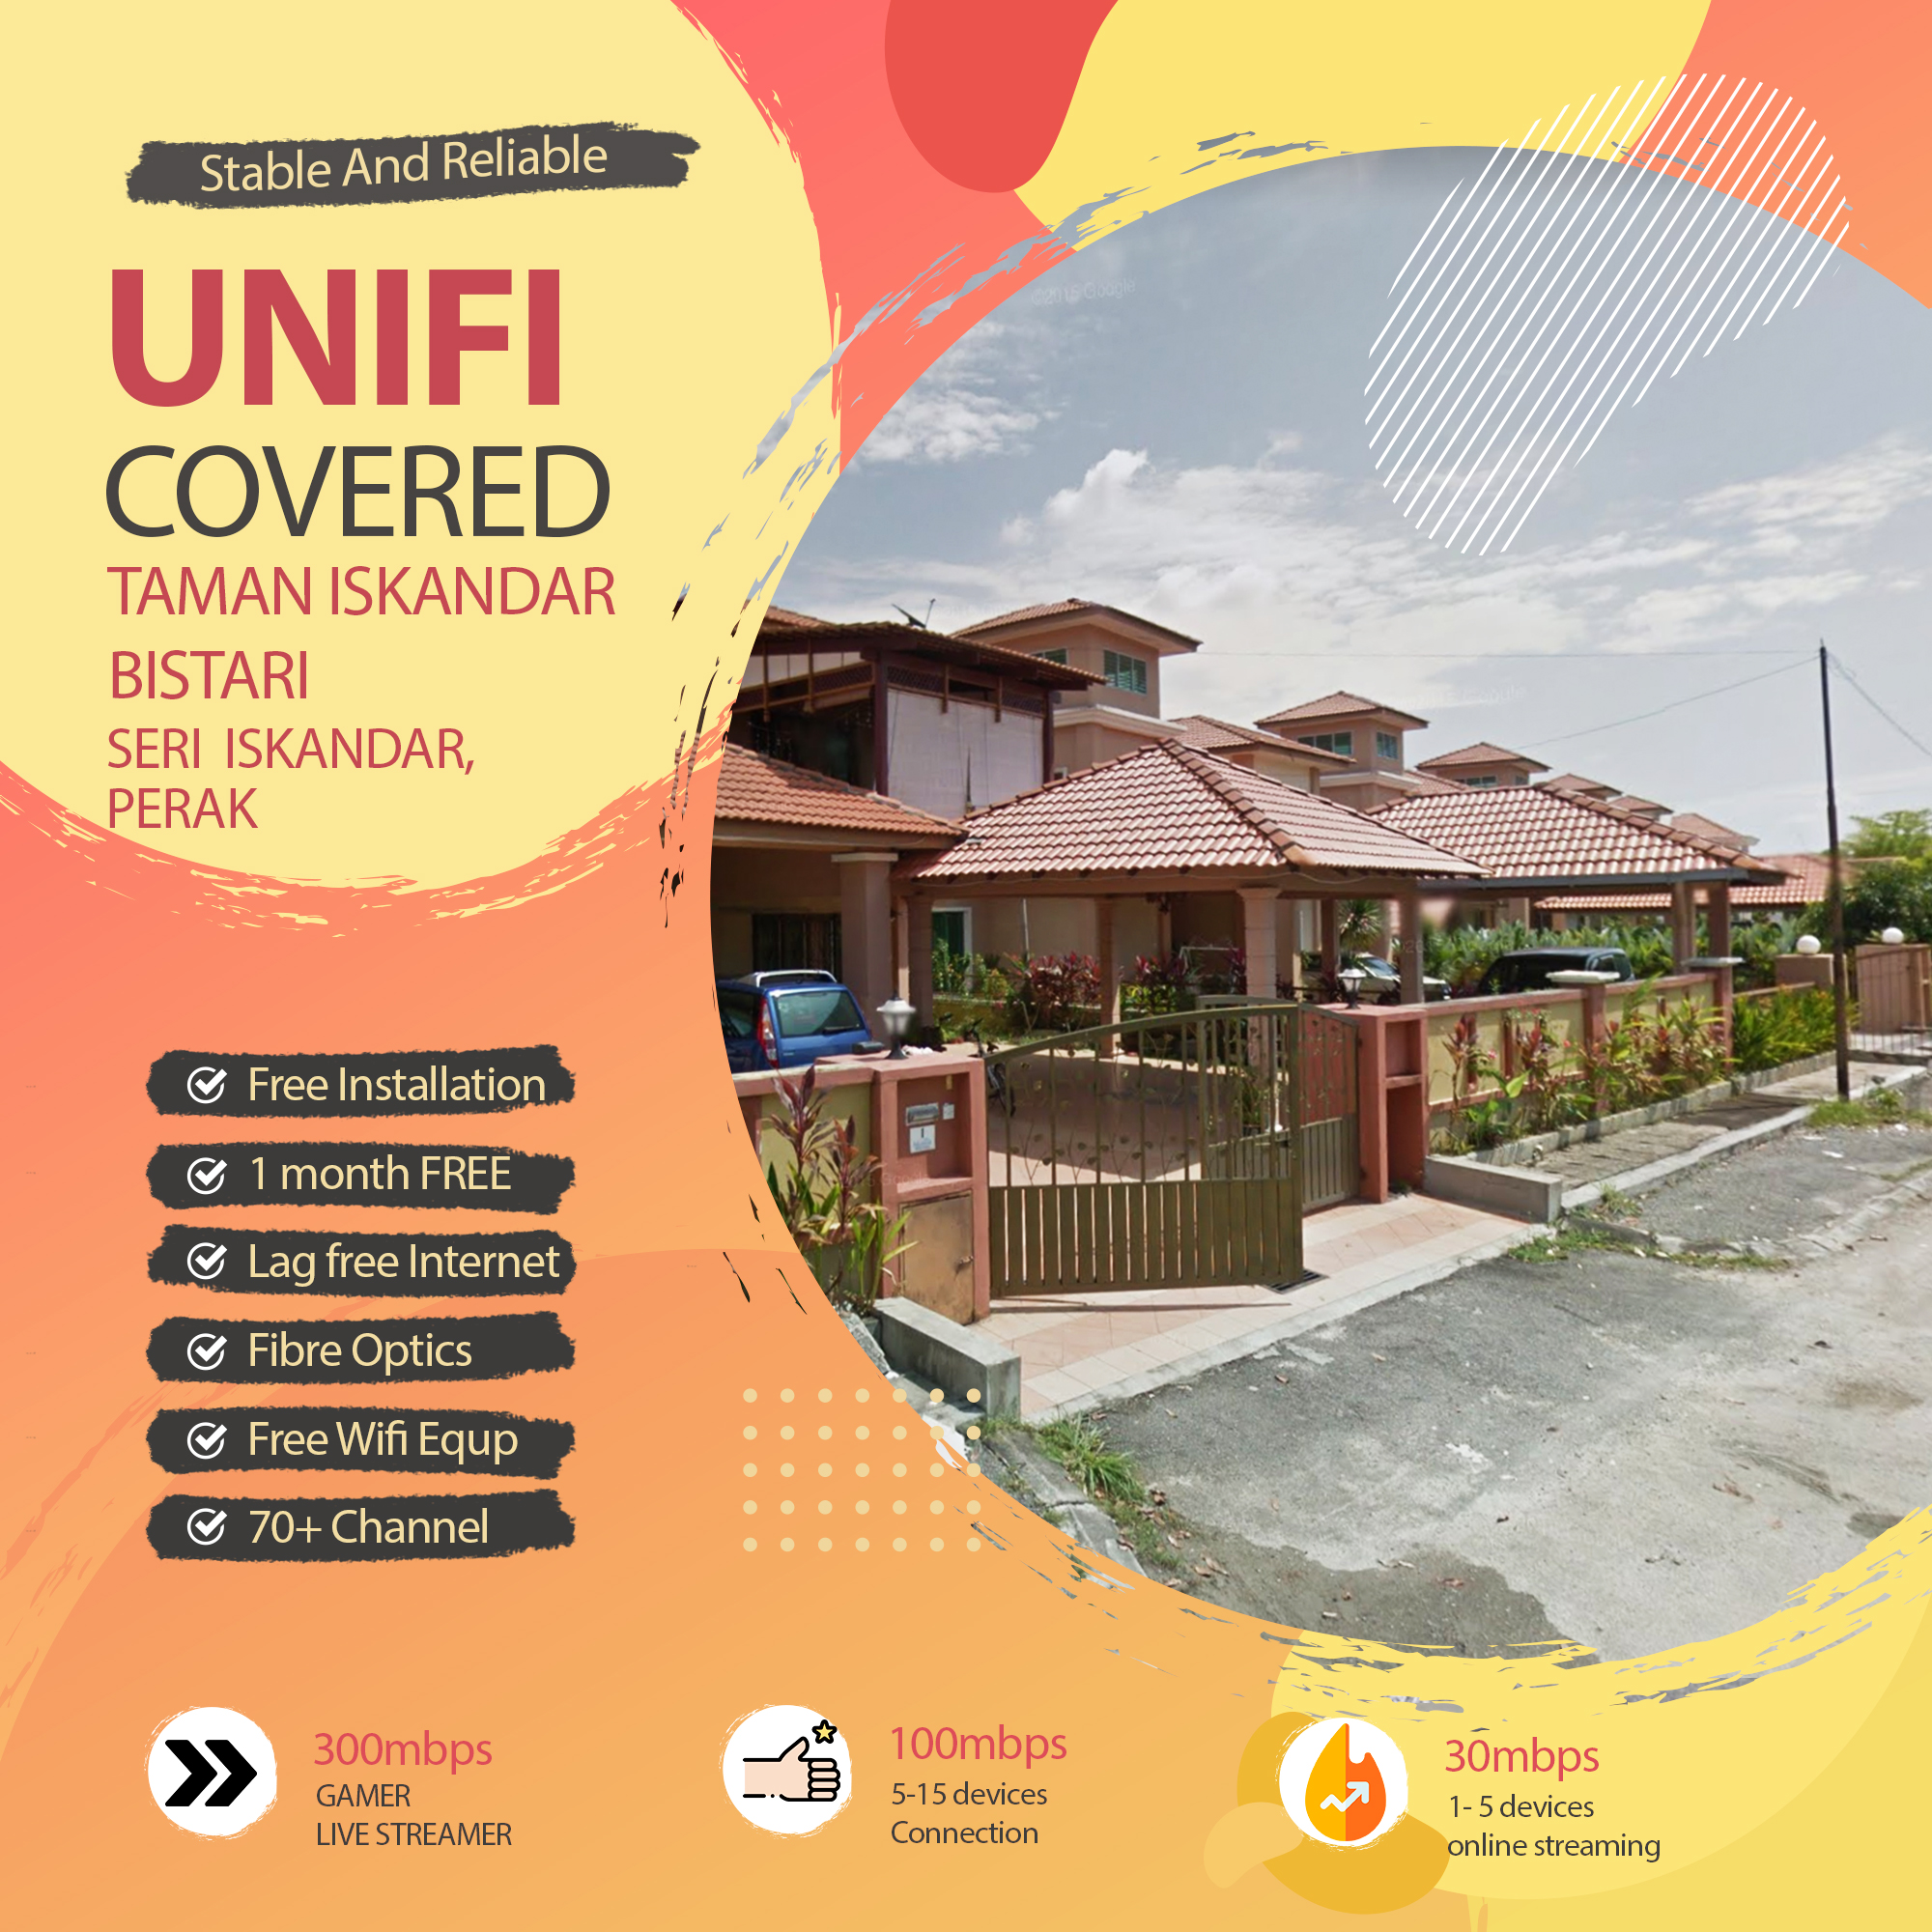 unifi Seri Iskandar Coverage – unifi Cover Taman Iskandar Bistari, Seri Iskandar With Fibre Optics Broadband